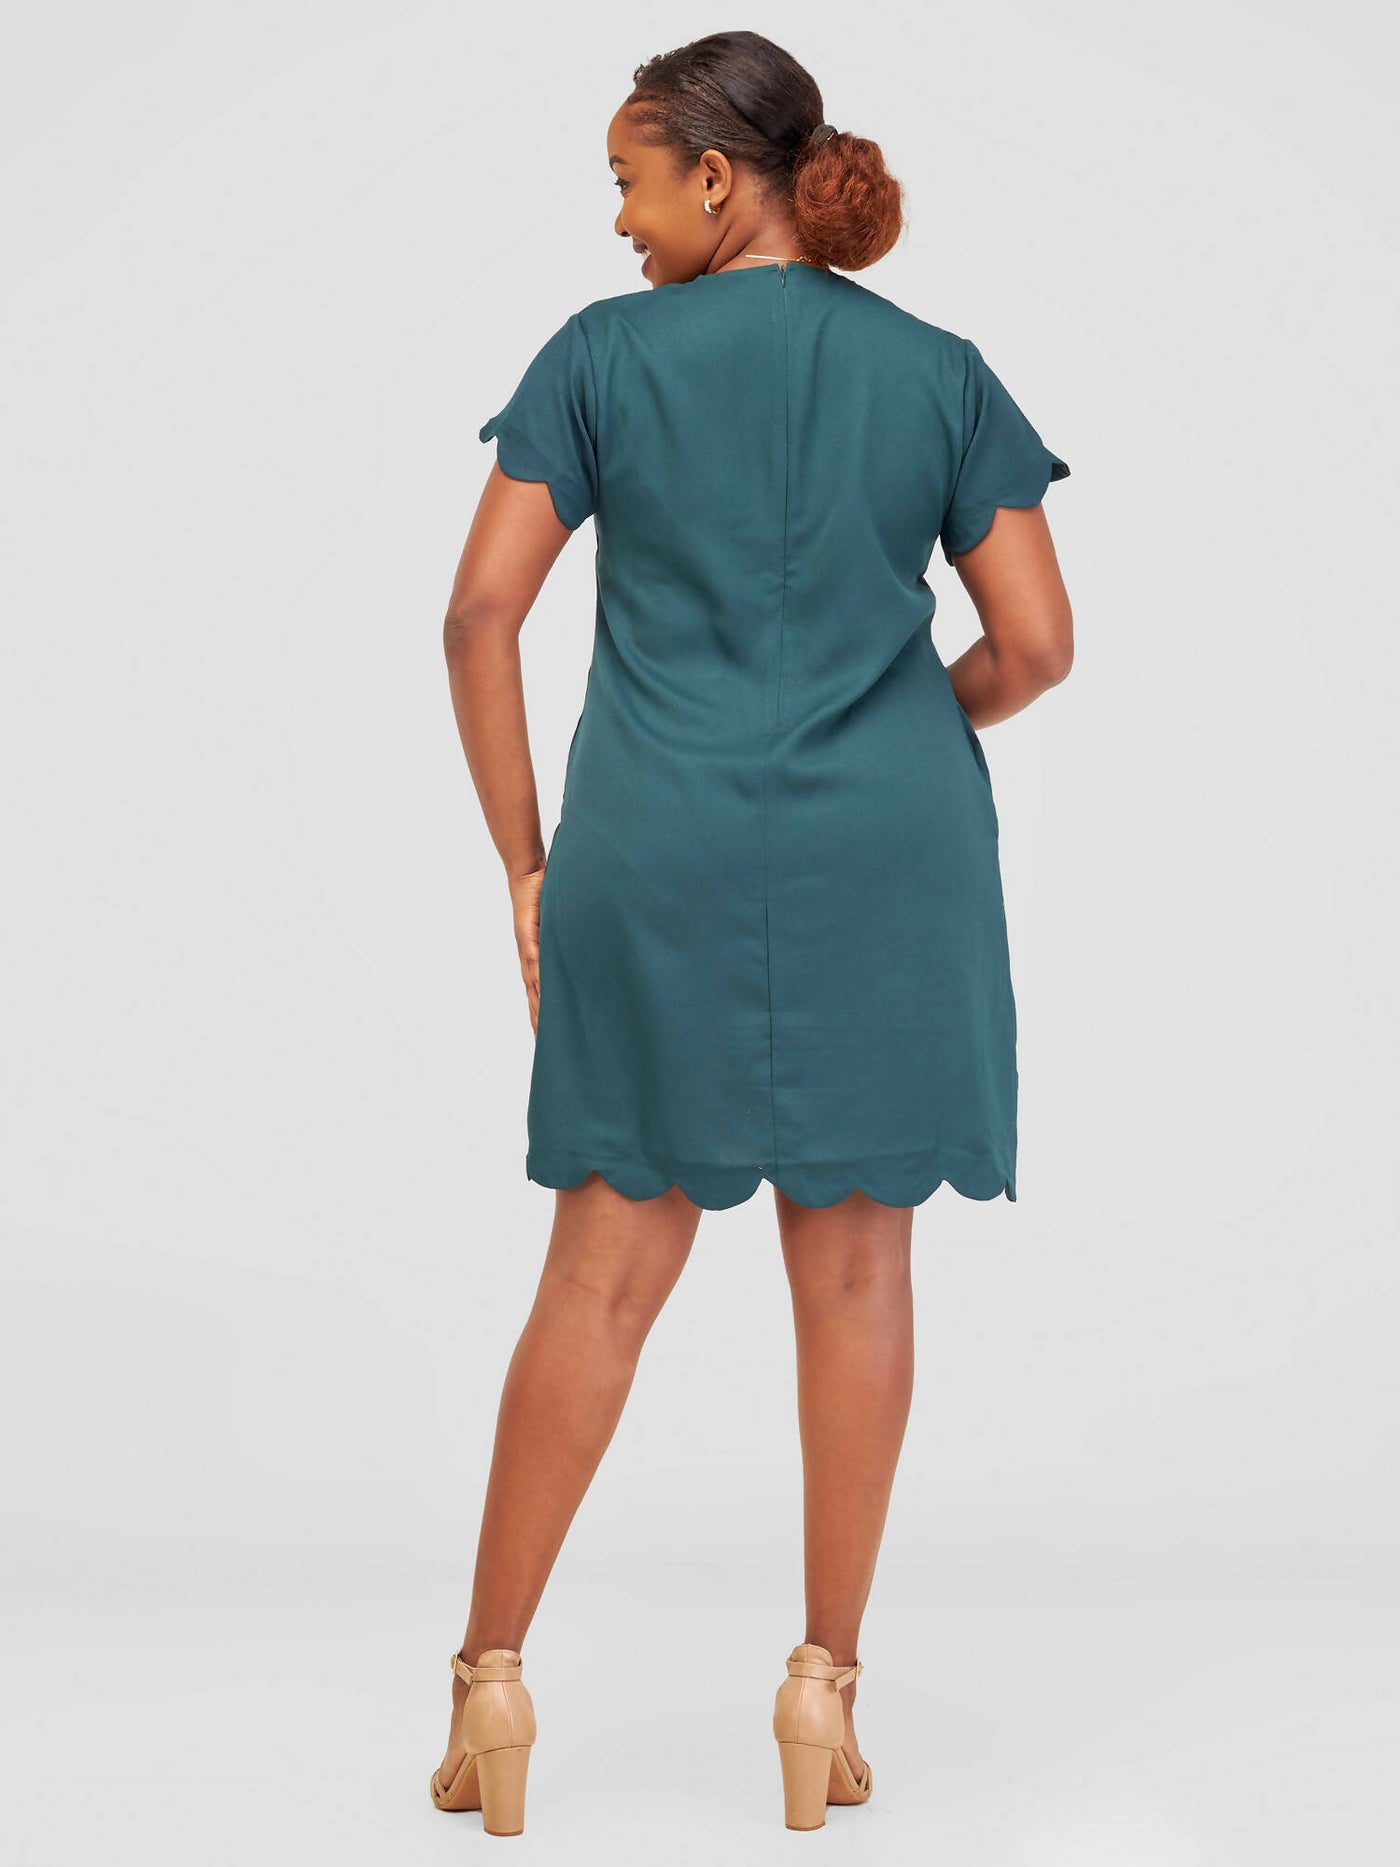 Distinct Wear Scallop Dress - Beige